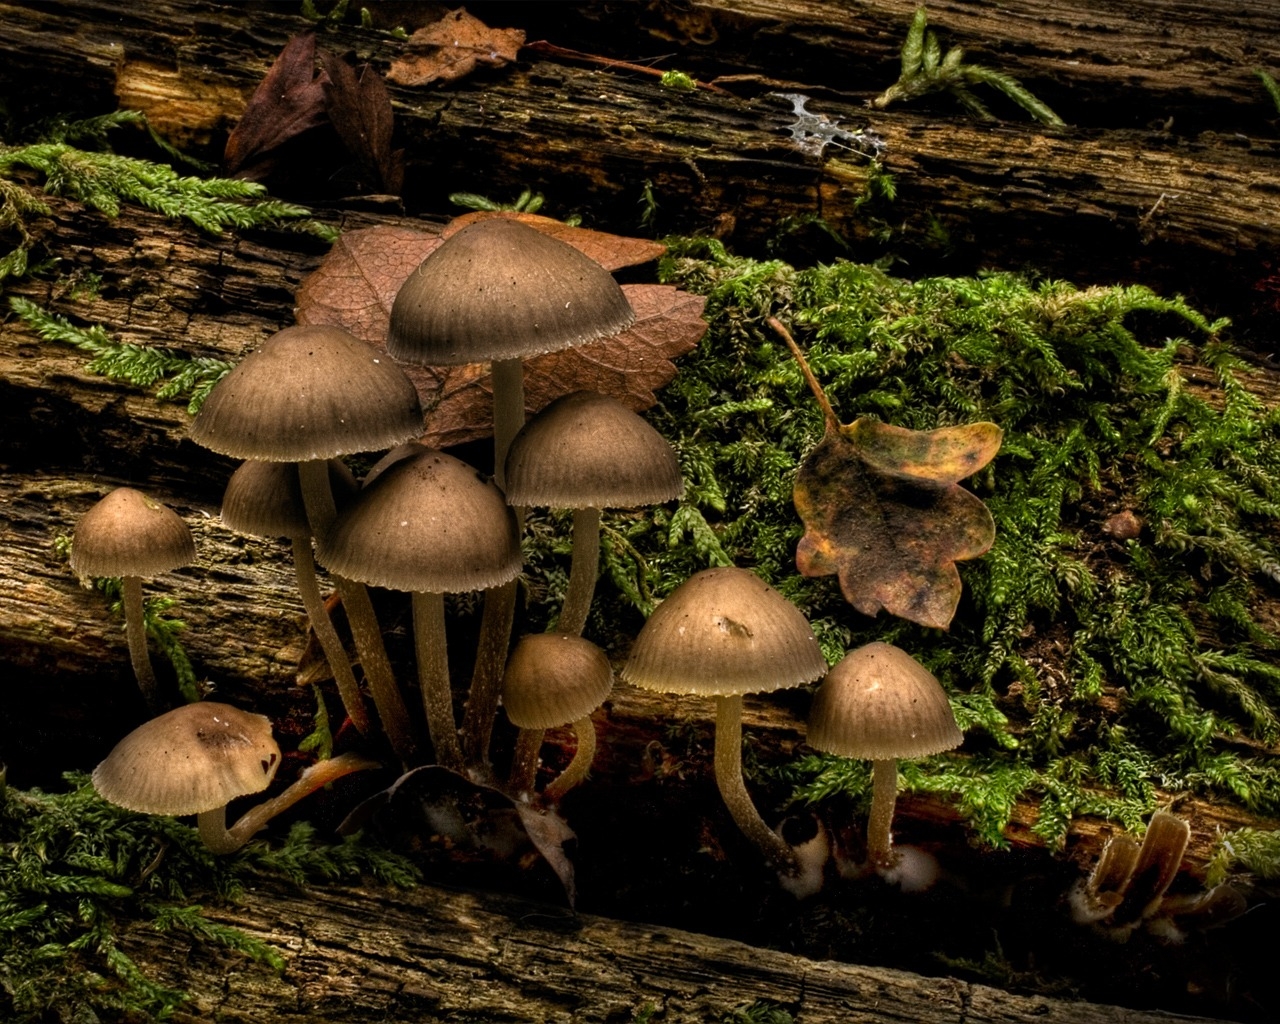 Mushrooms for 1280 x 1024 resolution